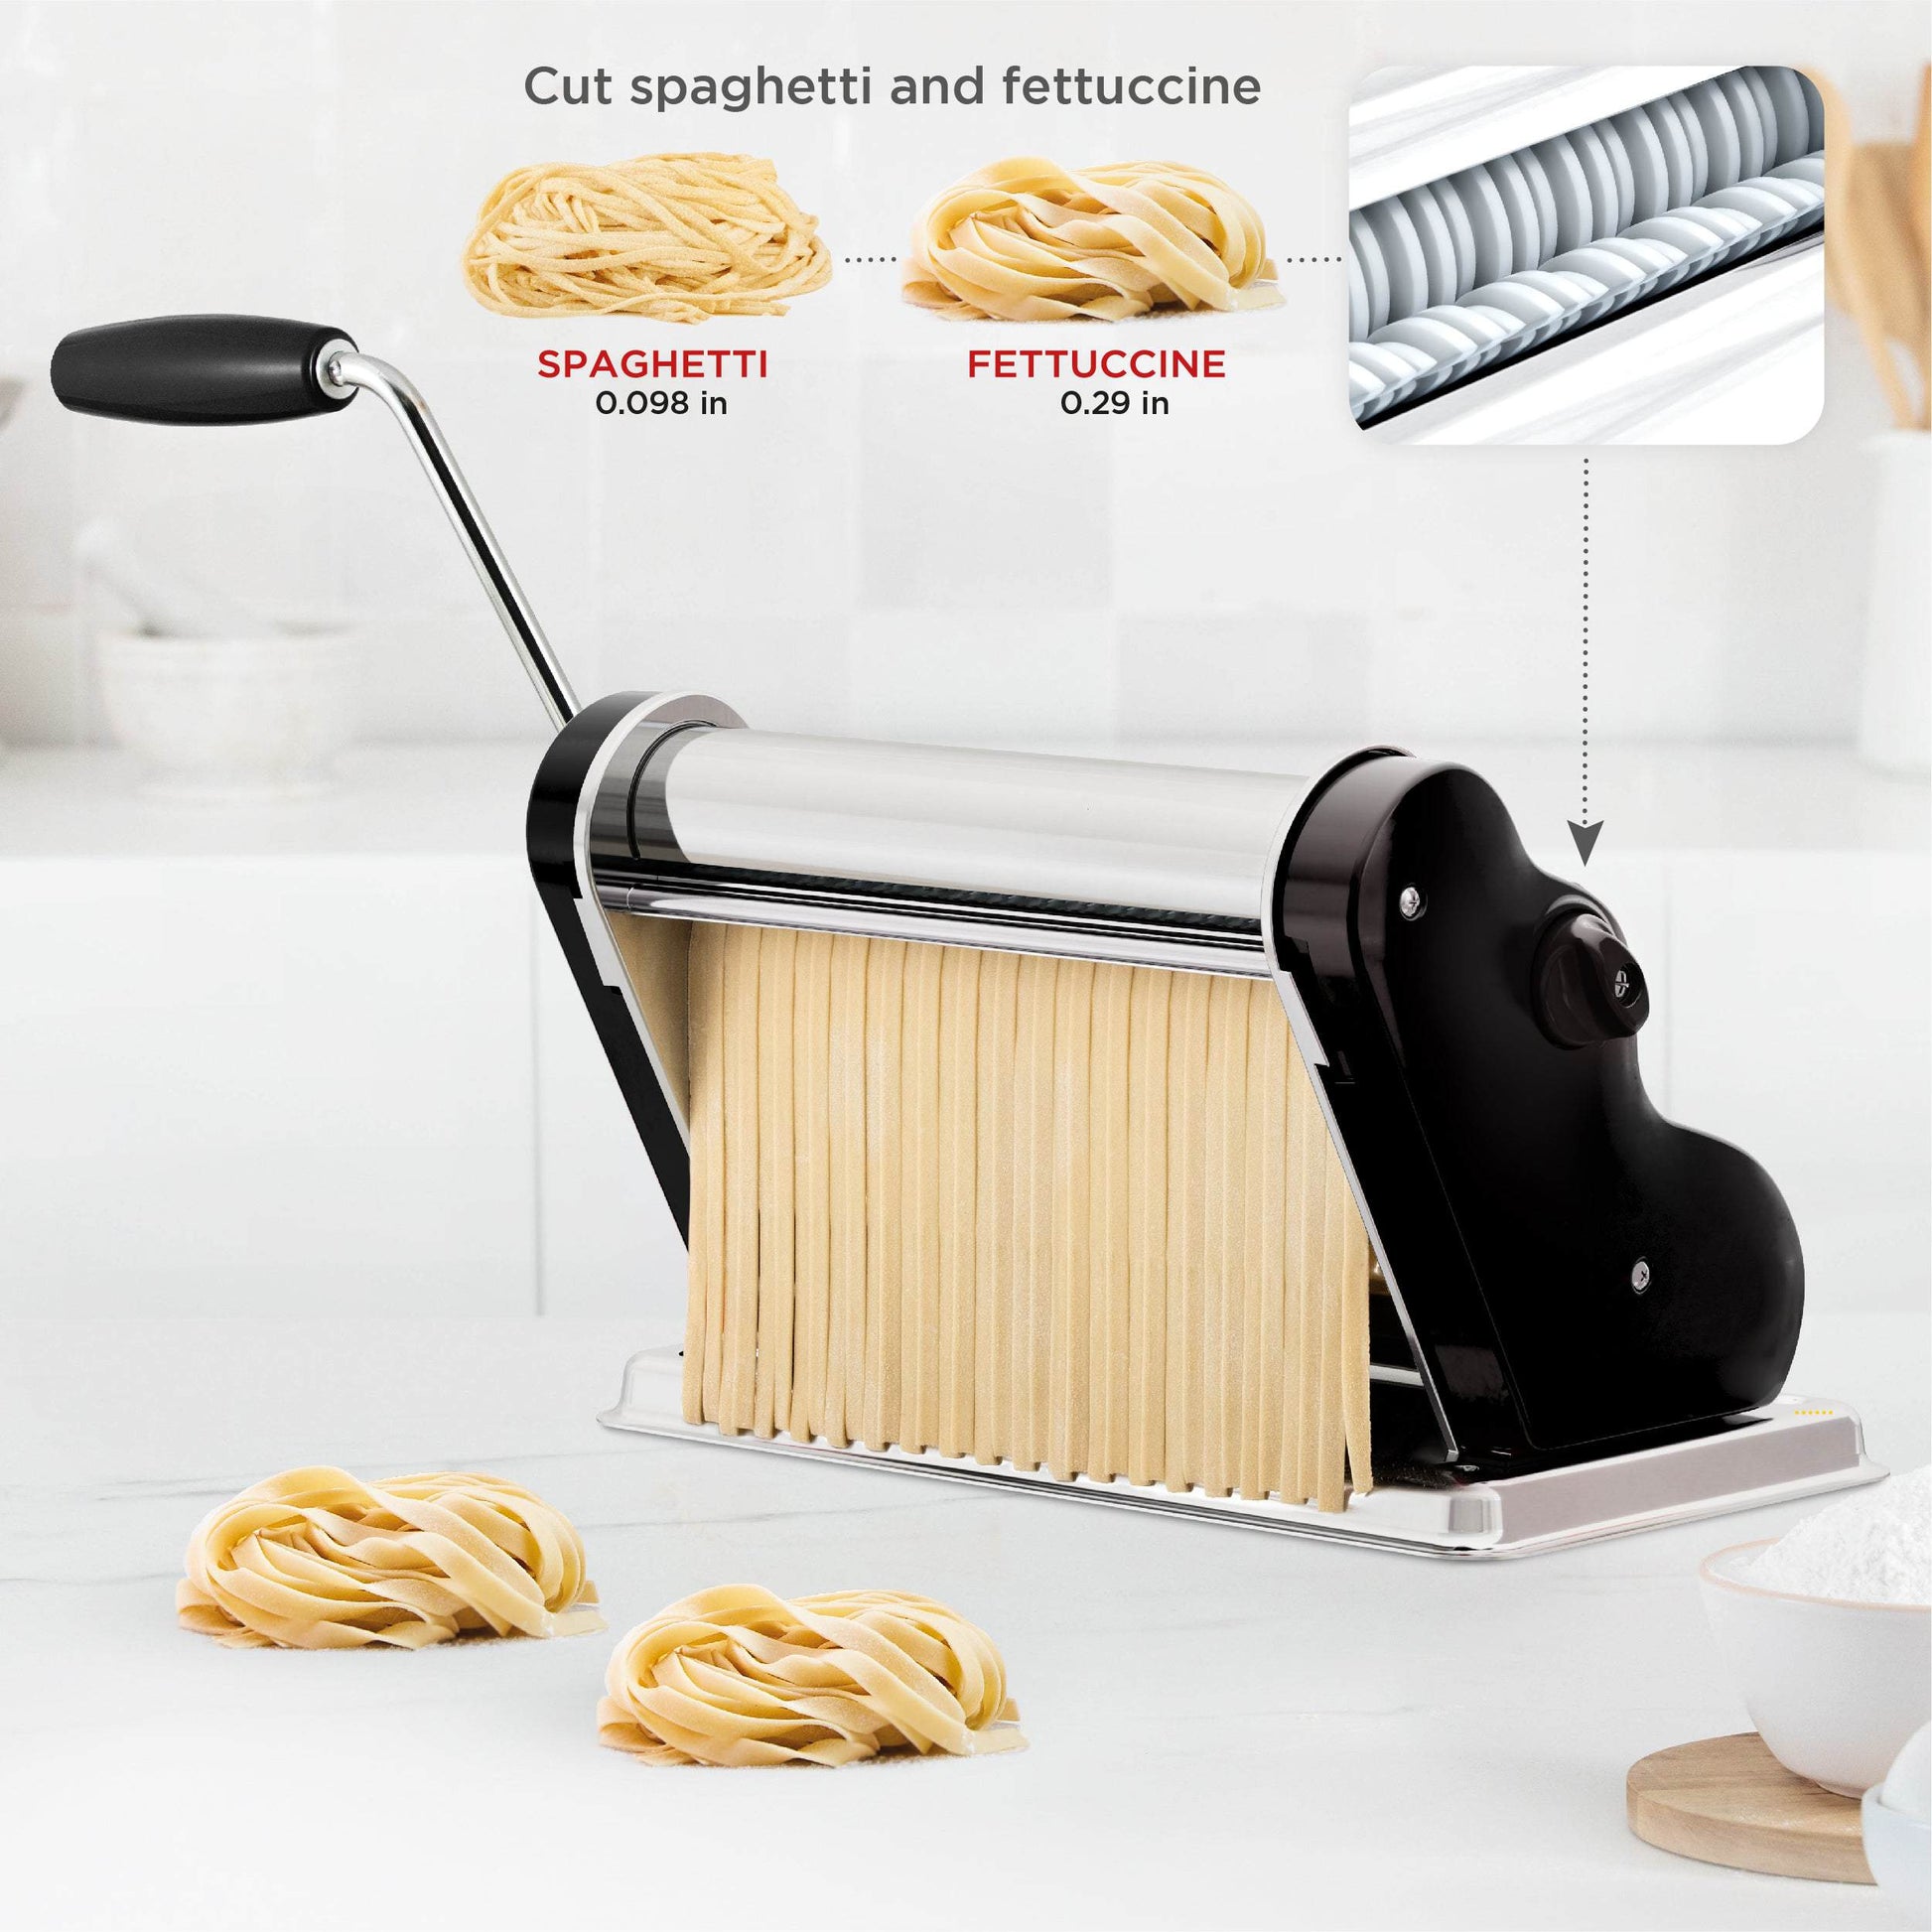 Pastalinda Classic 260 Black Pasta Maker Machine With Hand Crank And Two Clamps - Pastalinda